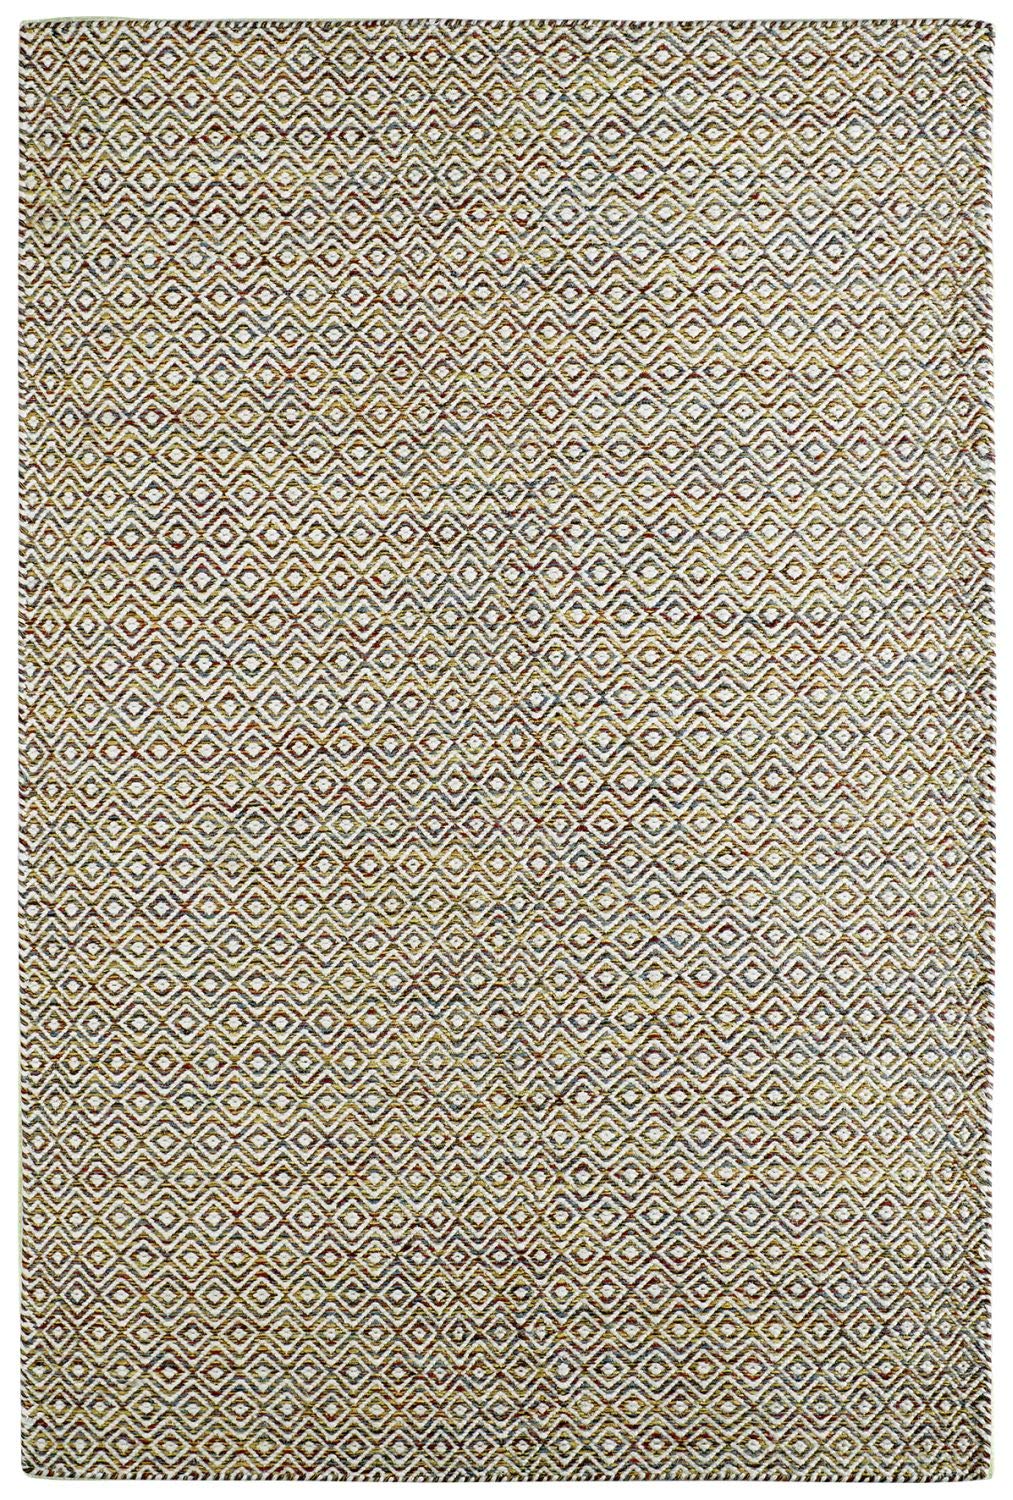 SchoenesWohnen24 Obsession Teppich Jaipur 334 Multicolor 80x150cm